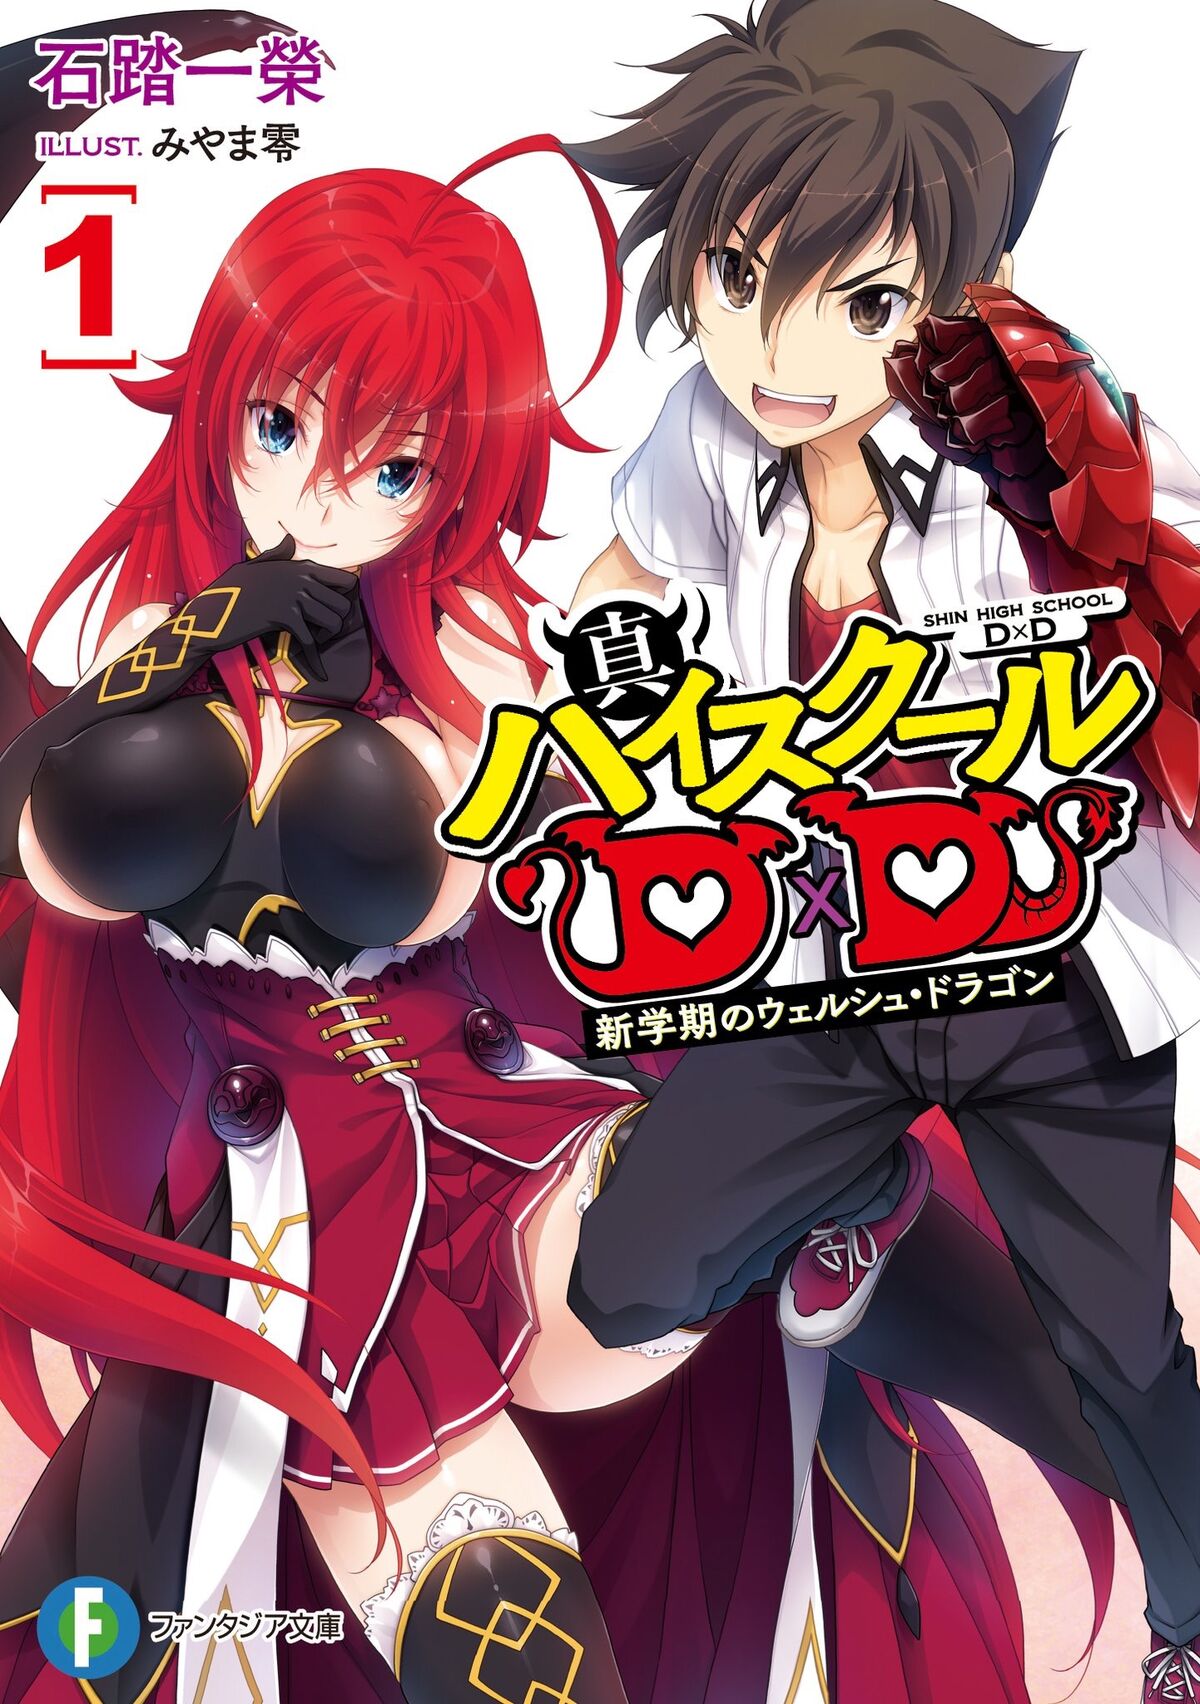 Read High-School Dxd Vol.5 Chapter 26 on Mangakakalot